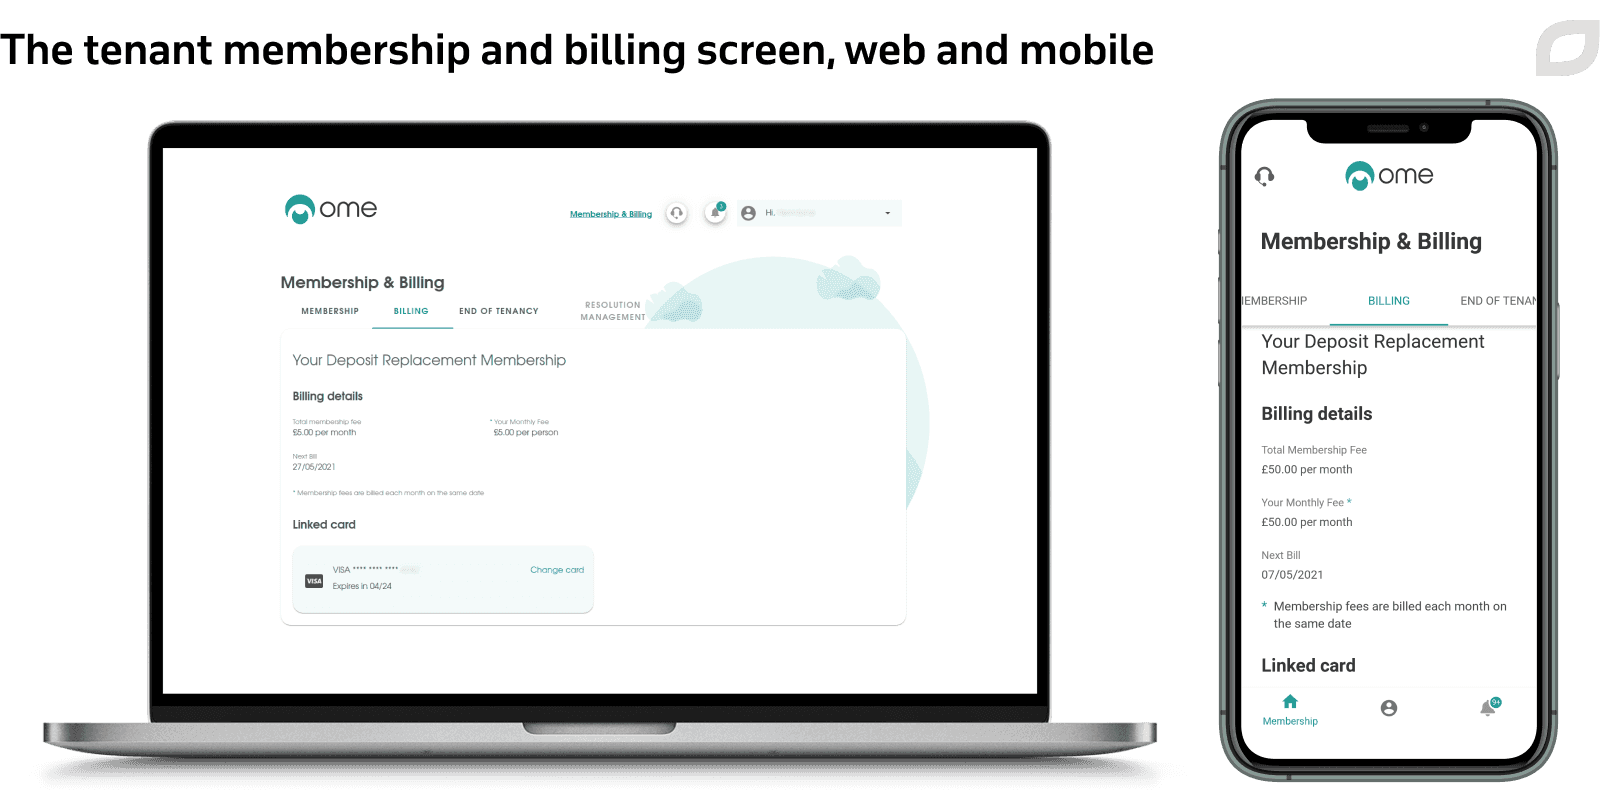 The tenant membership and billing screen, web and mobile